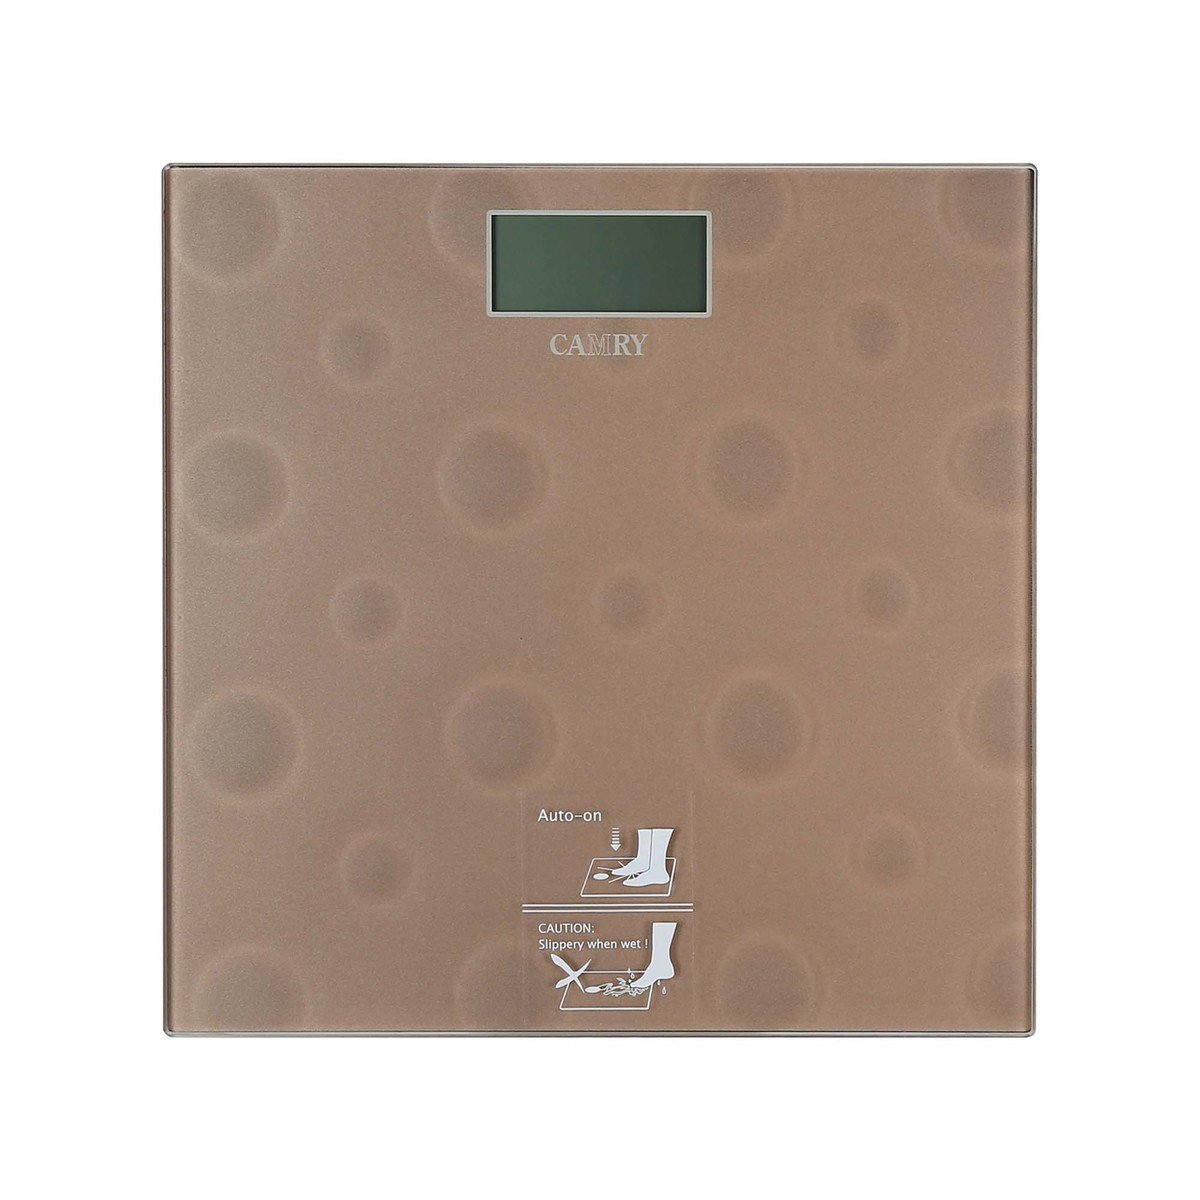 Camry Digital Bathroom Scale 3D EB9D01 Assorted